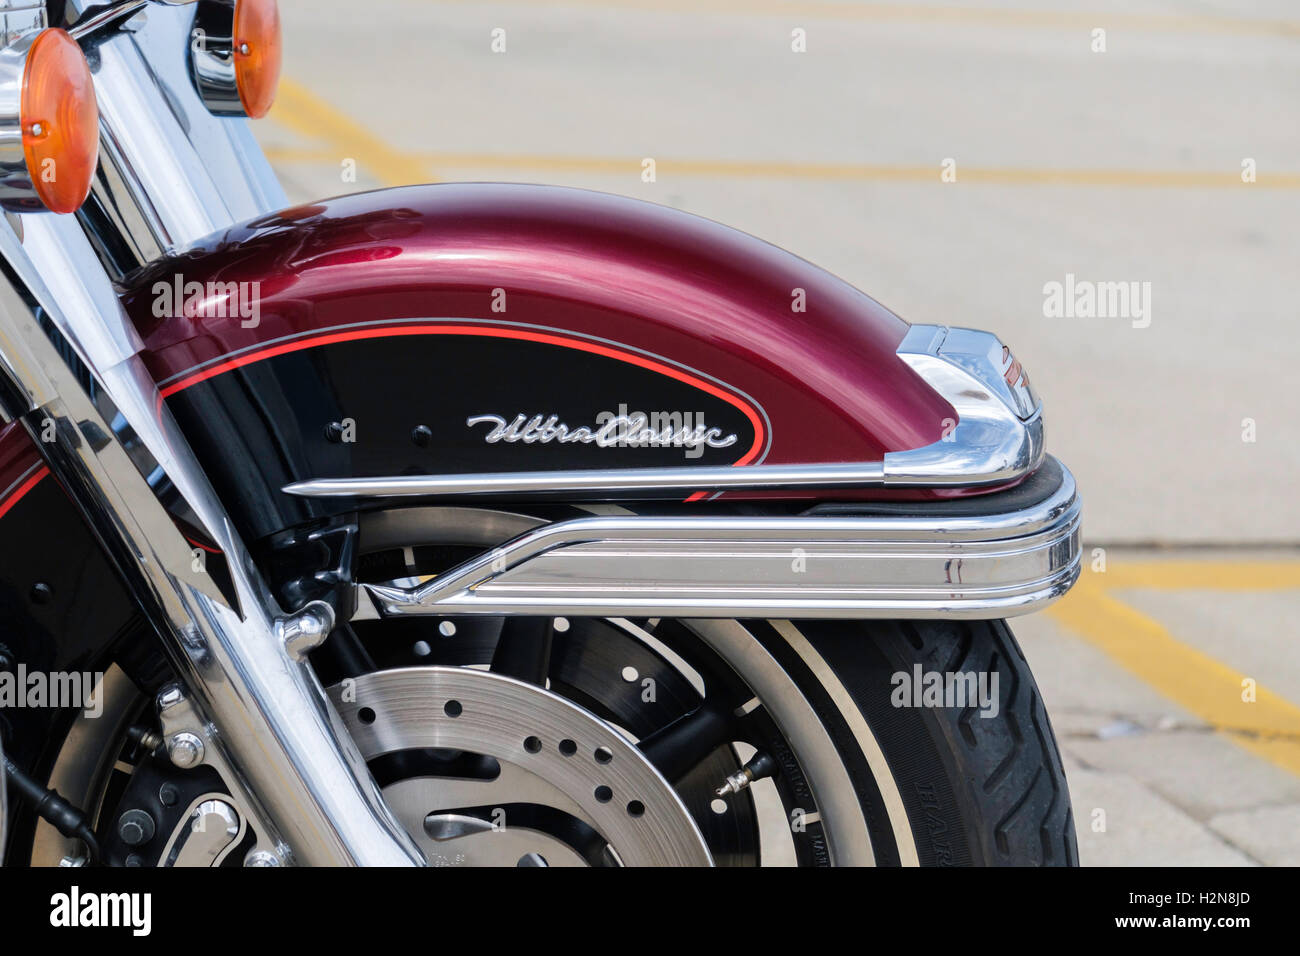 Das Vorderrad von einer tiefroten Harley Davidson Ultra Classic Motorrad, Nahaufnahme. Oklahoma City, Oklahoma, USA. Stockfoto